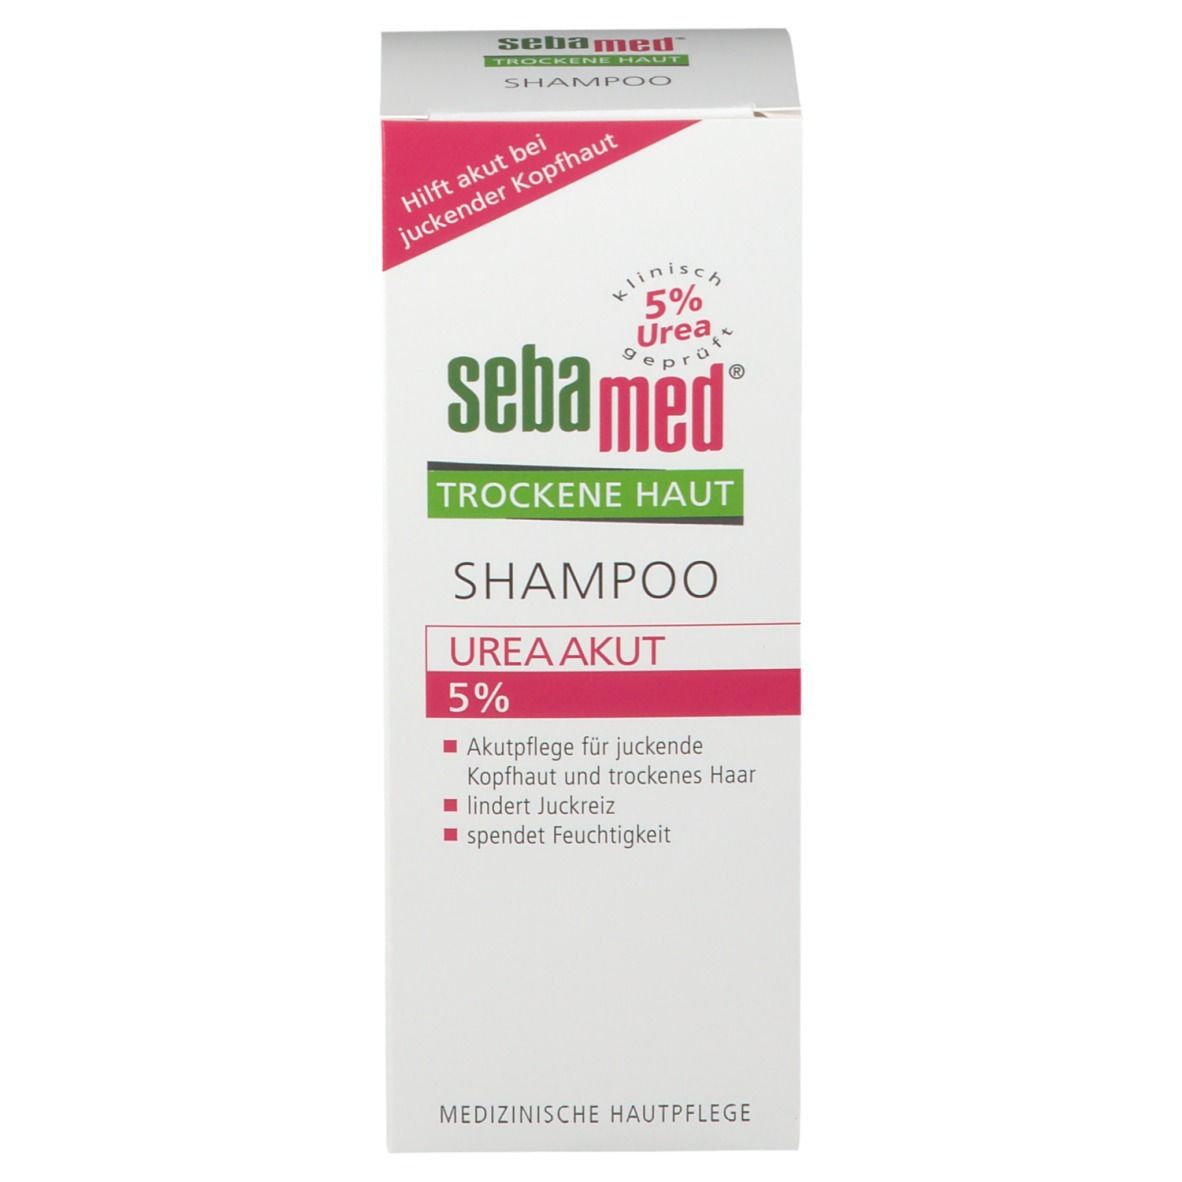 sebamed® Shampooing Urea Akut 5% Peaux sèches